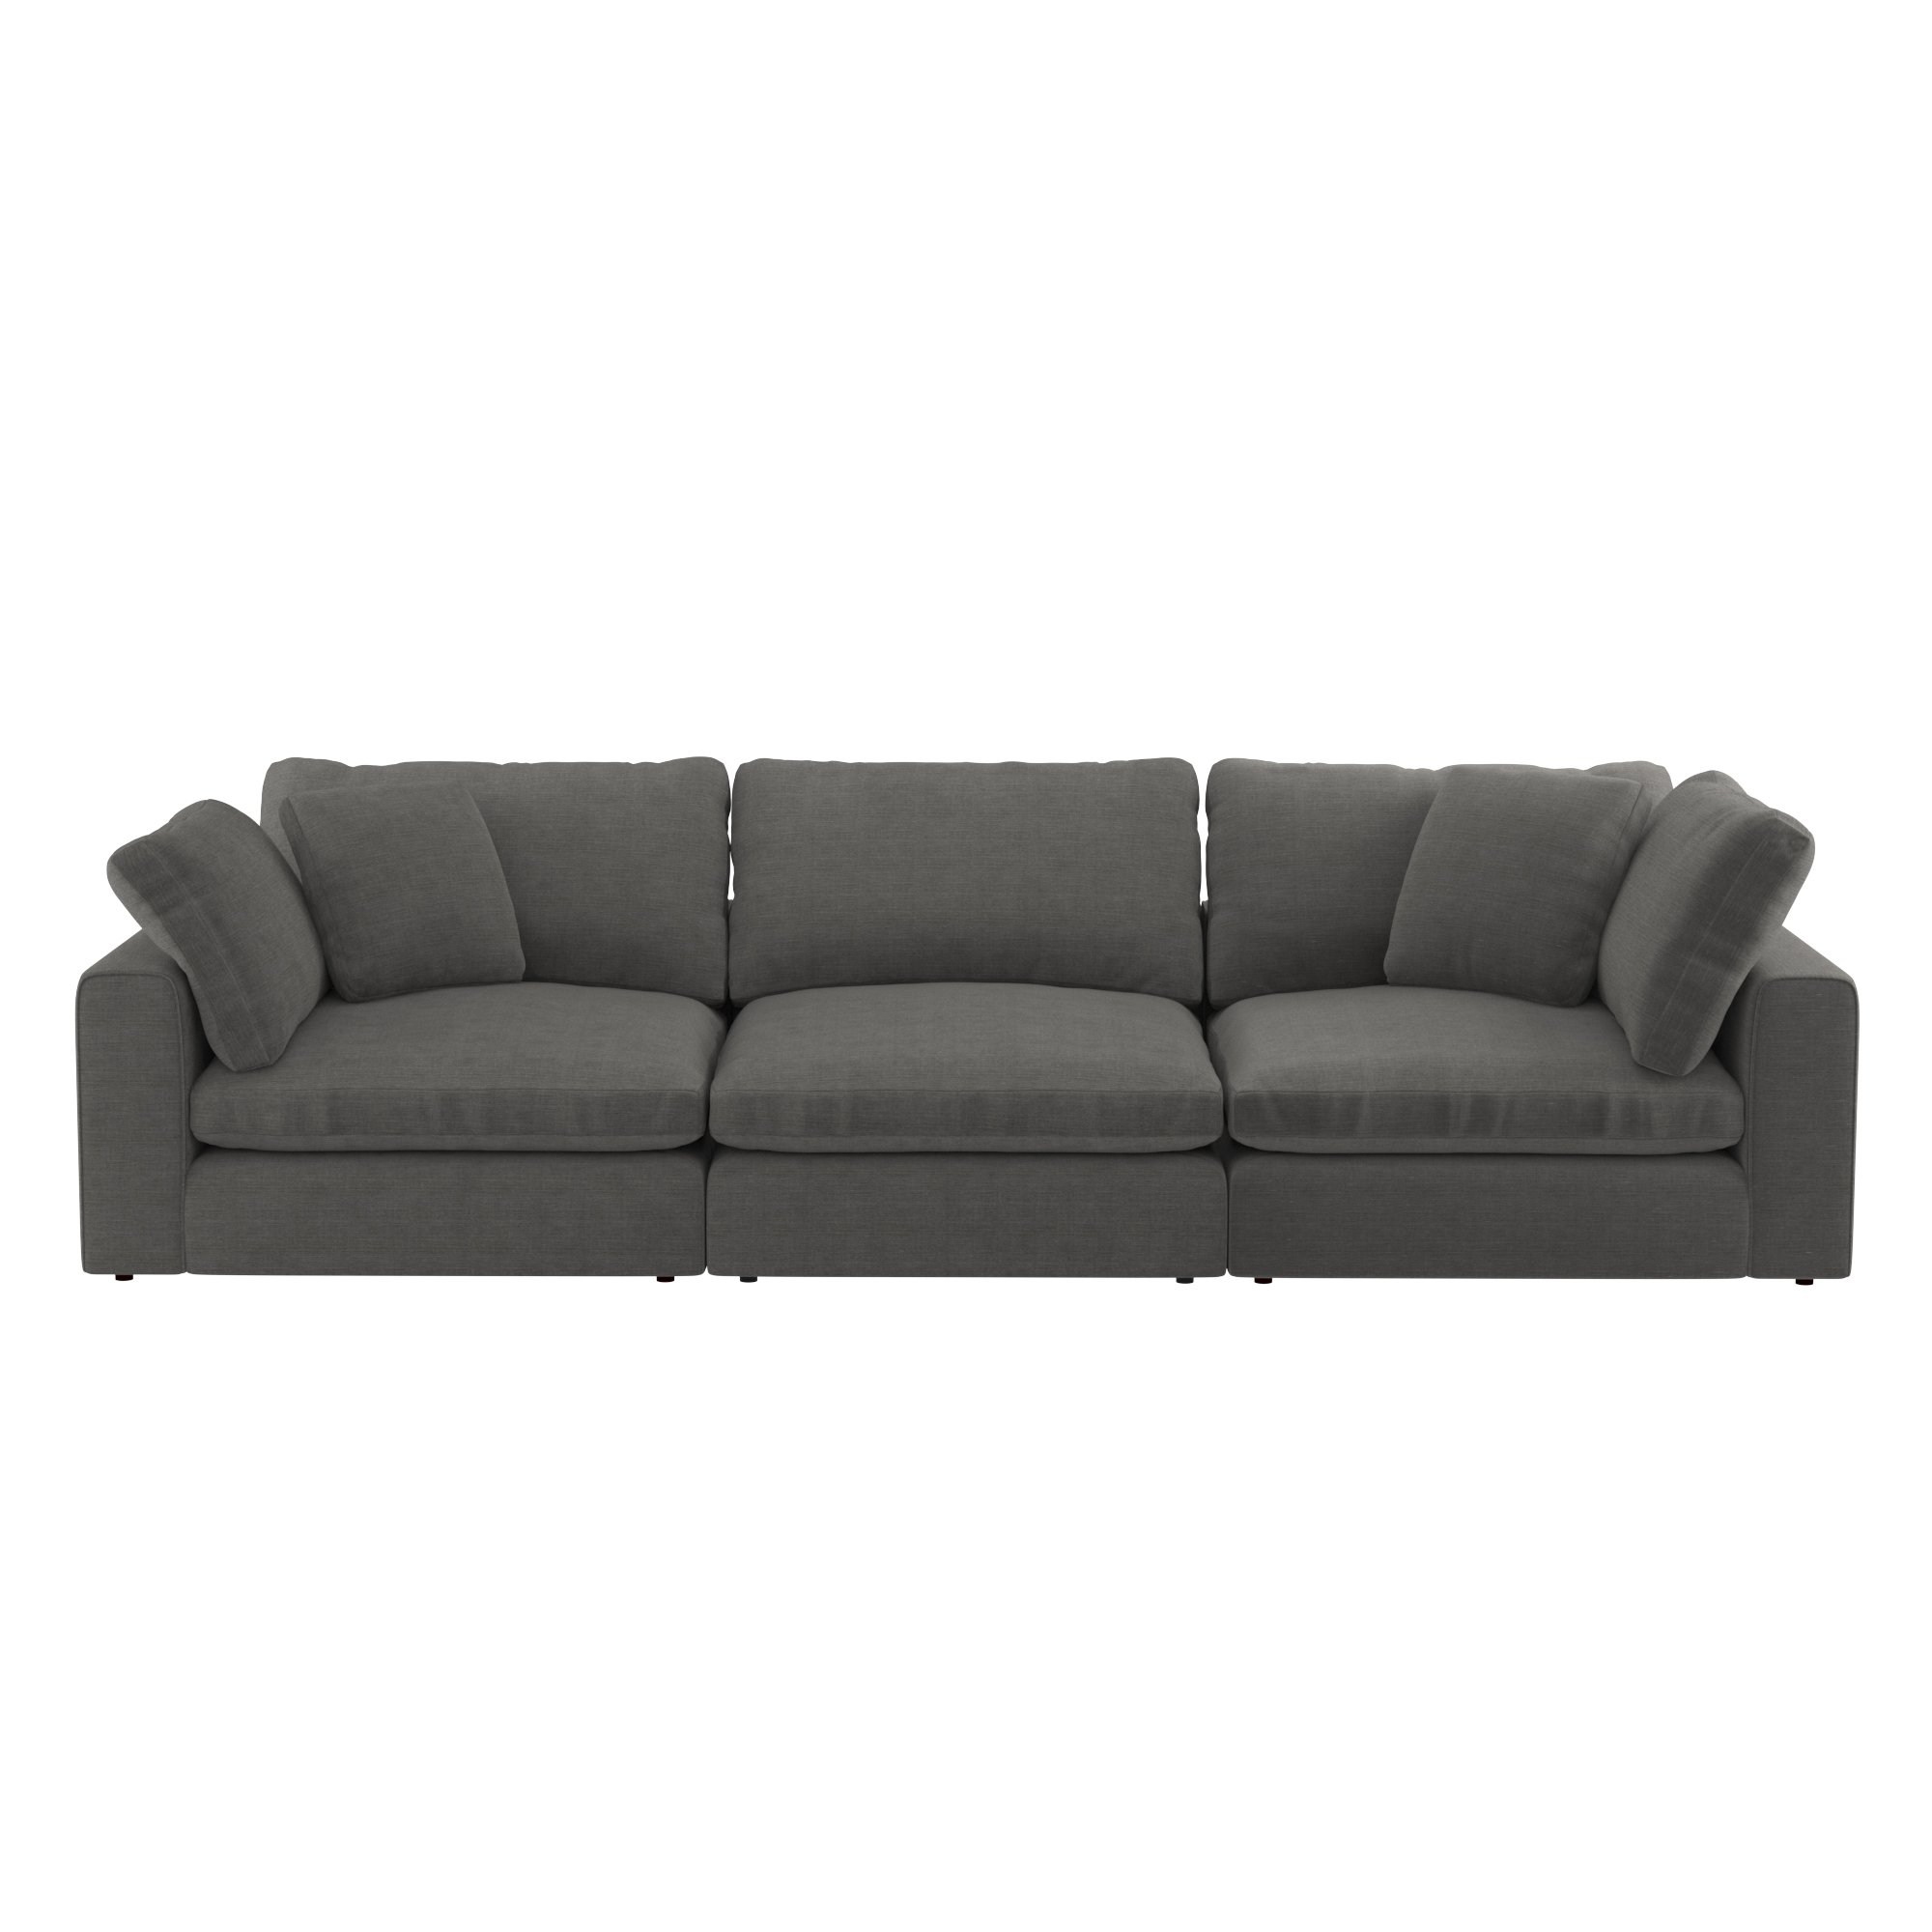 Artenis 3 Seater Sofa, Grey Fabric | Barker & Stonehouse